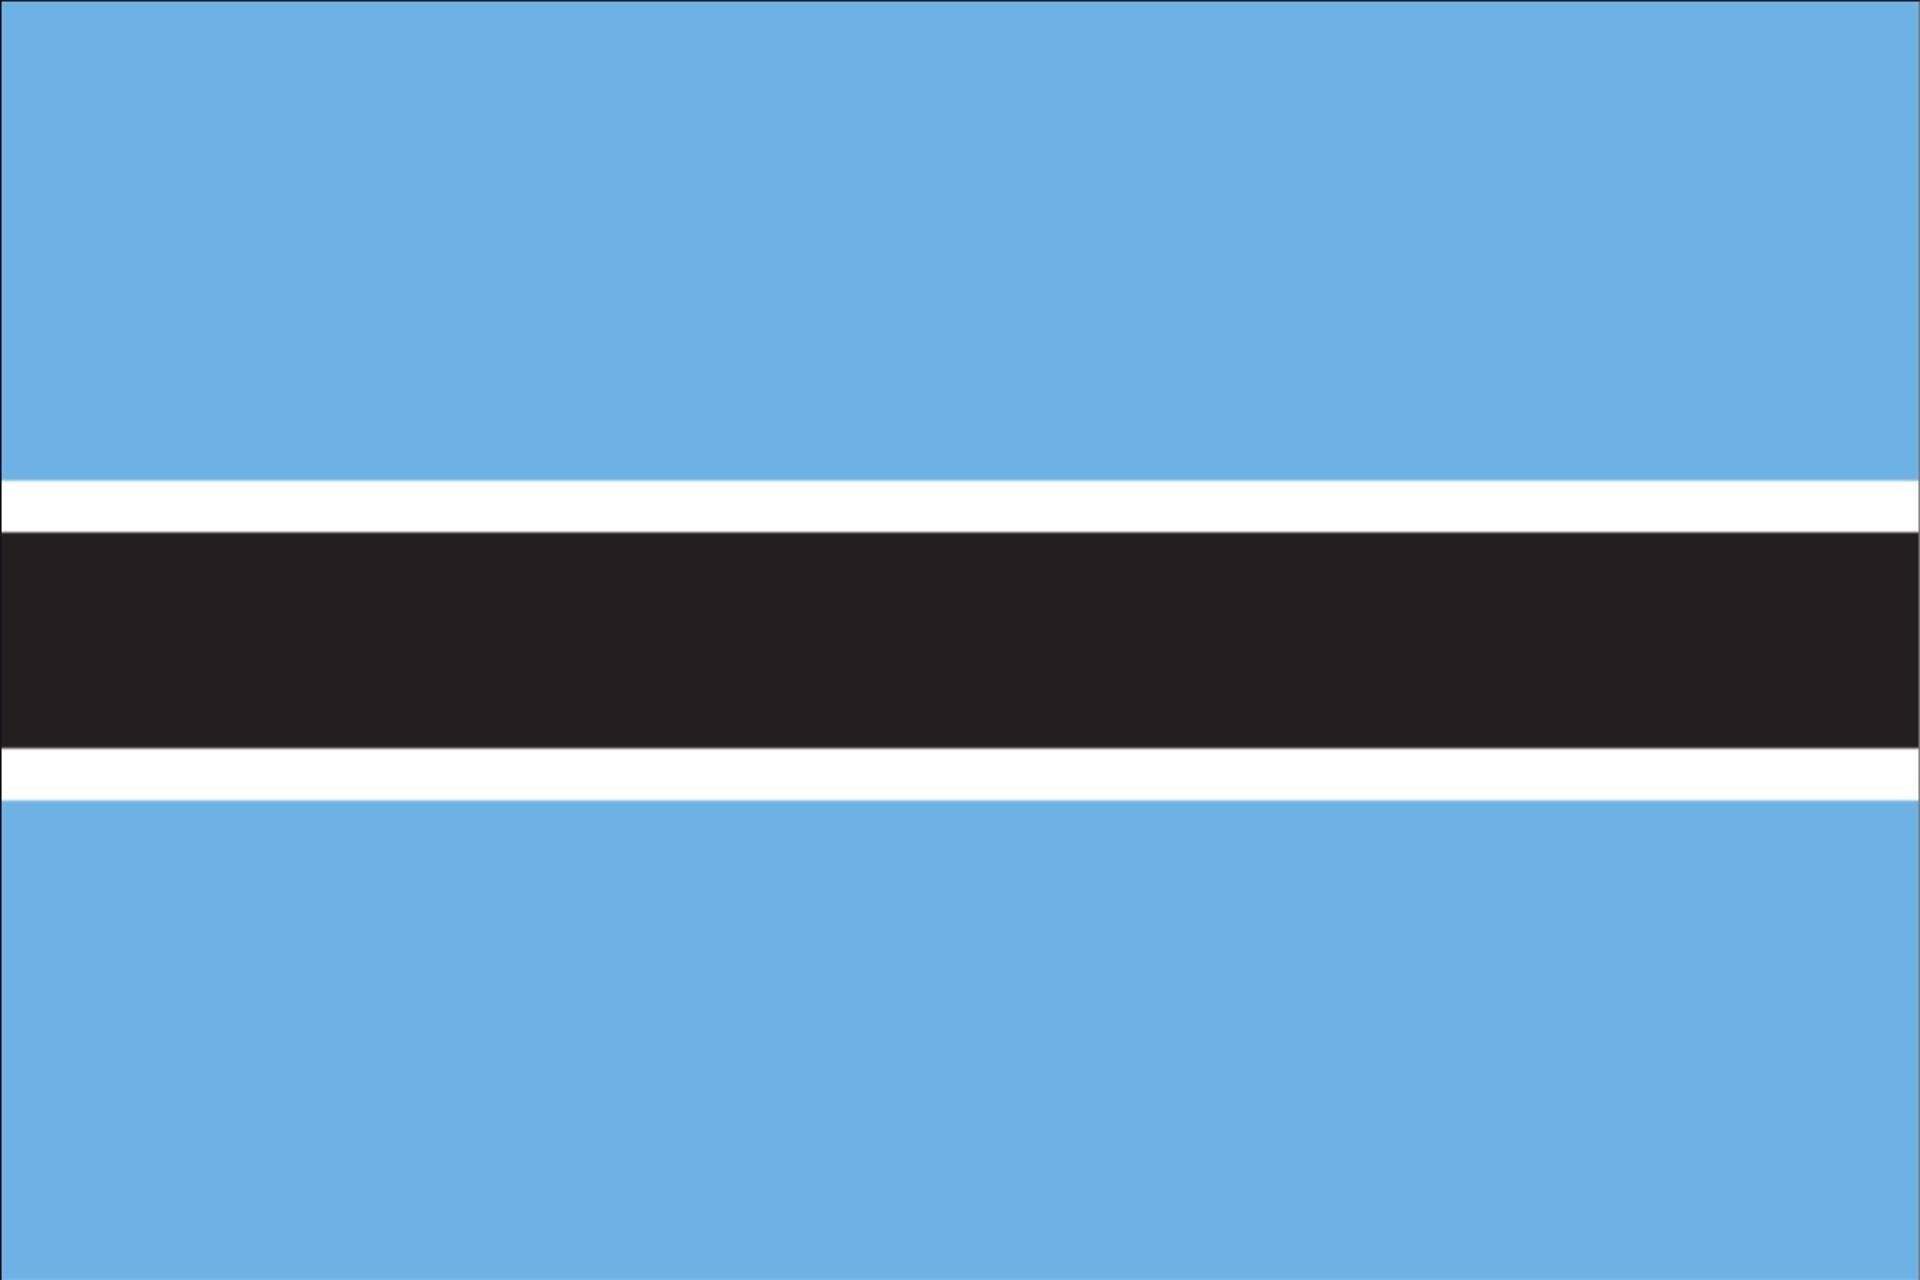 Botswana flaggenmeer g/m² Flagge 80